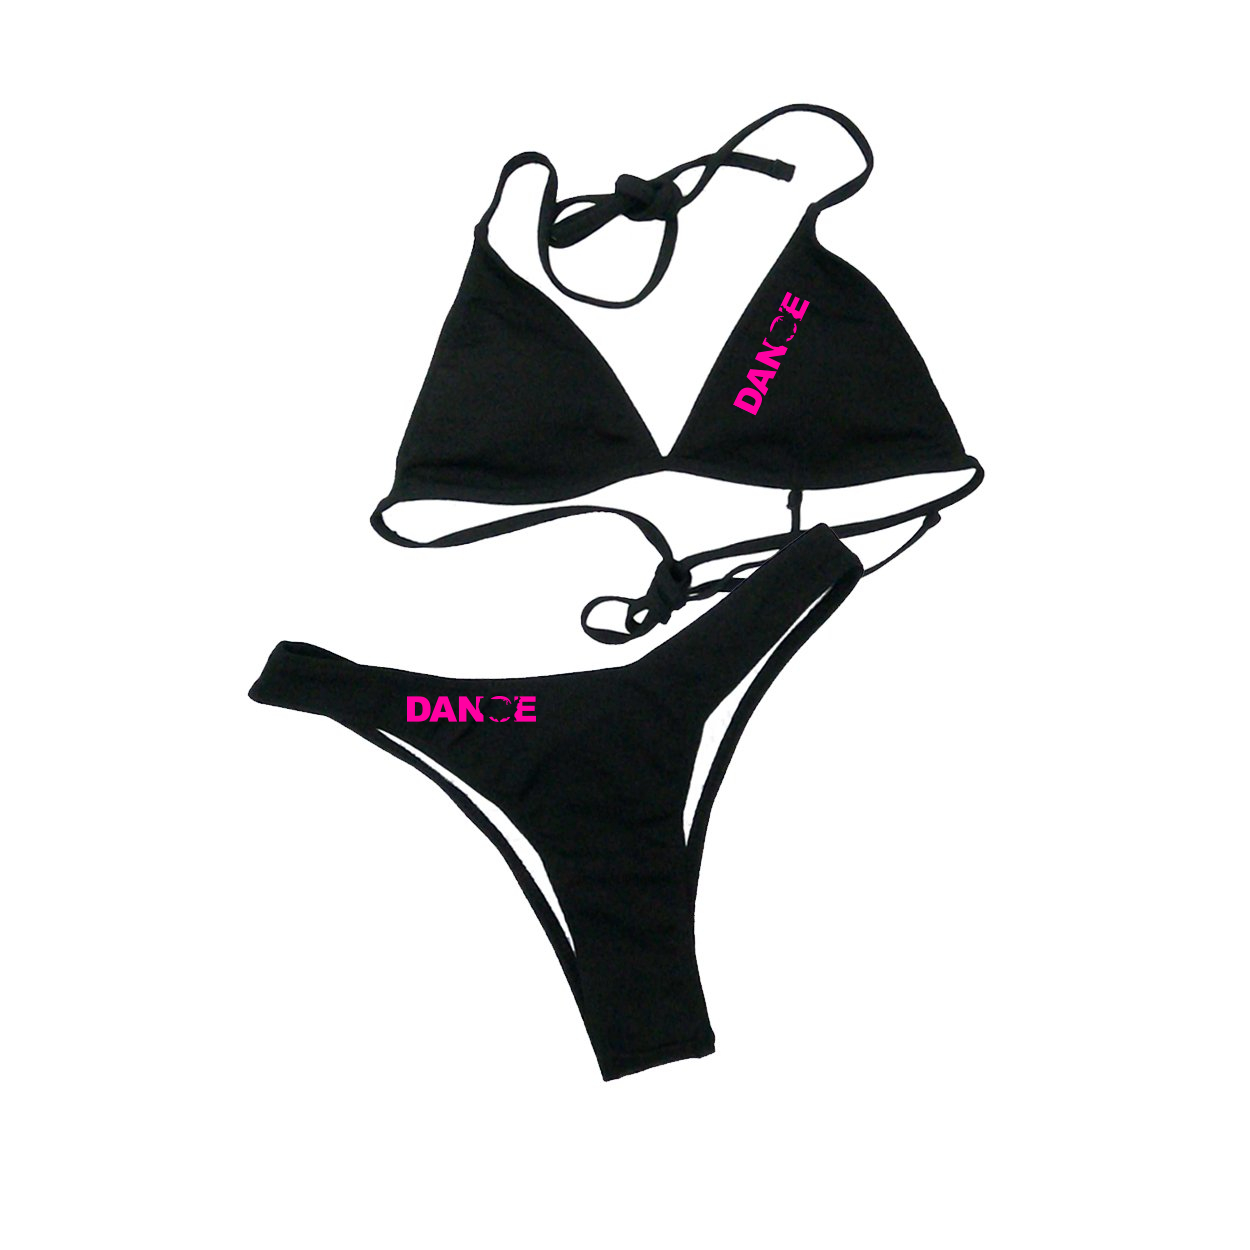 Dance United States Classic Womens Padded Halter Triangle Two-Piece Swimsuit Basics Bikini Black (Pink Logo)